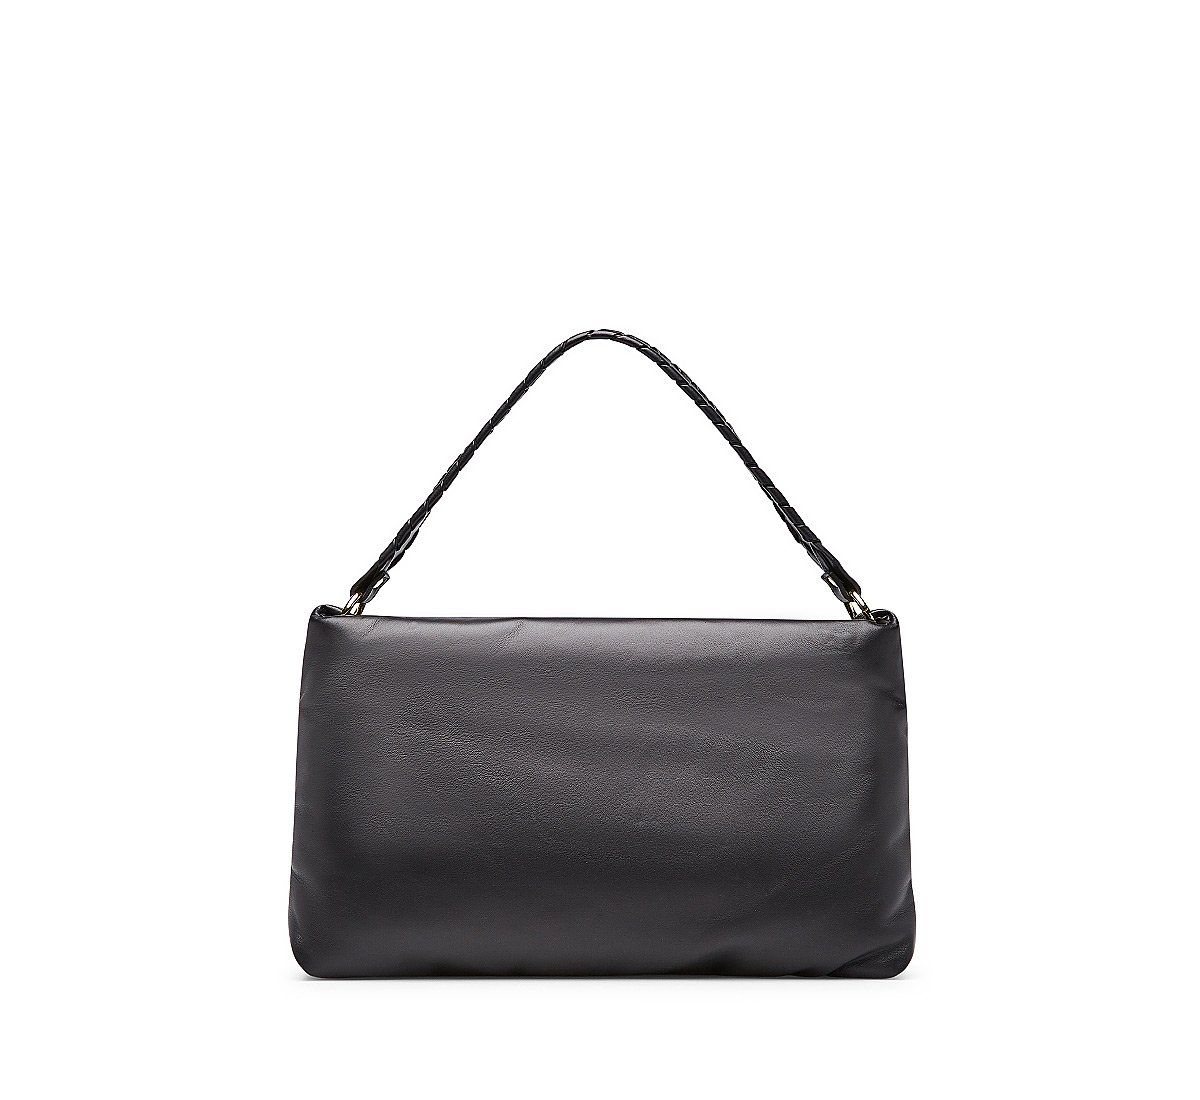 Soft leather bag